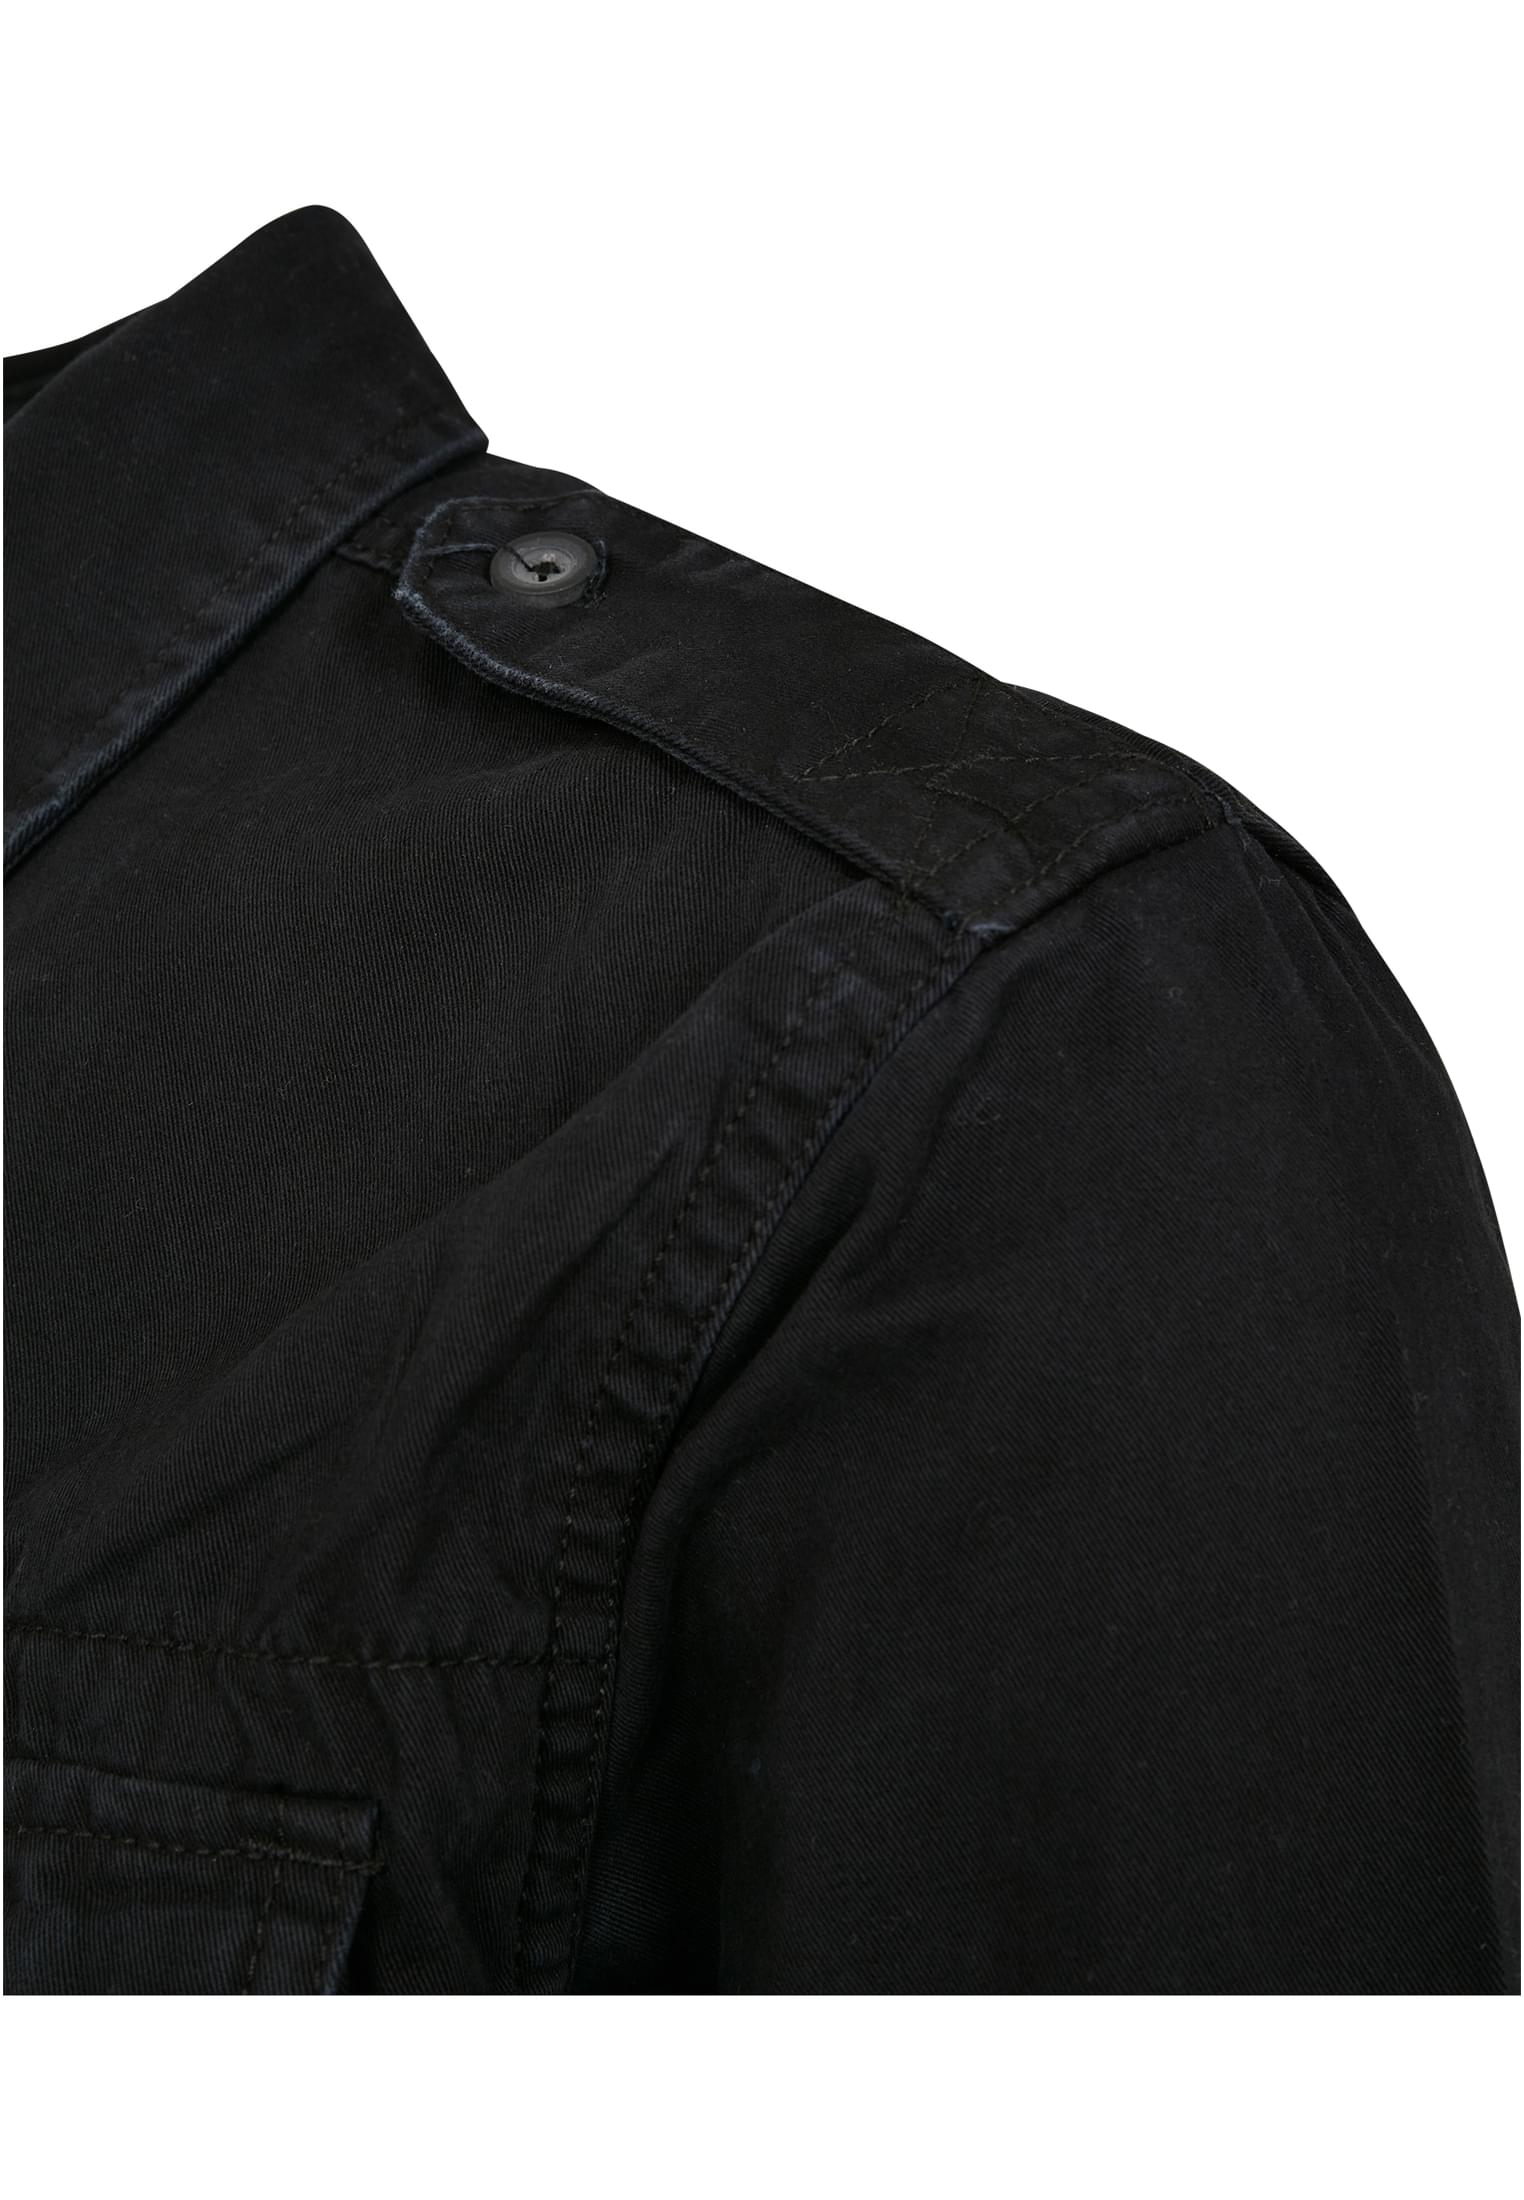 Hemden Vintage Shirt in Farbe black